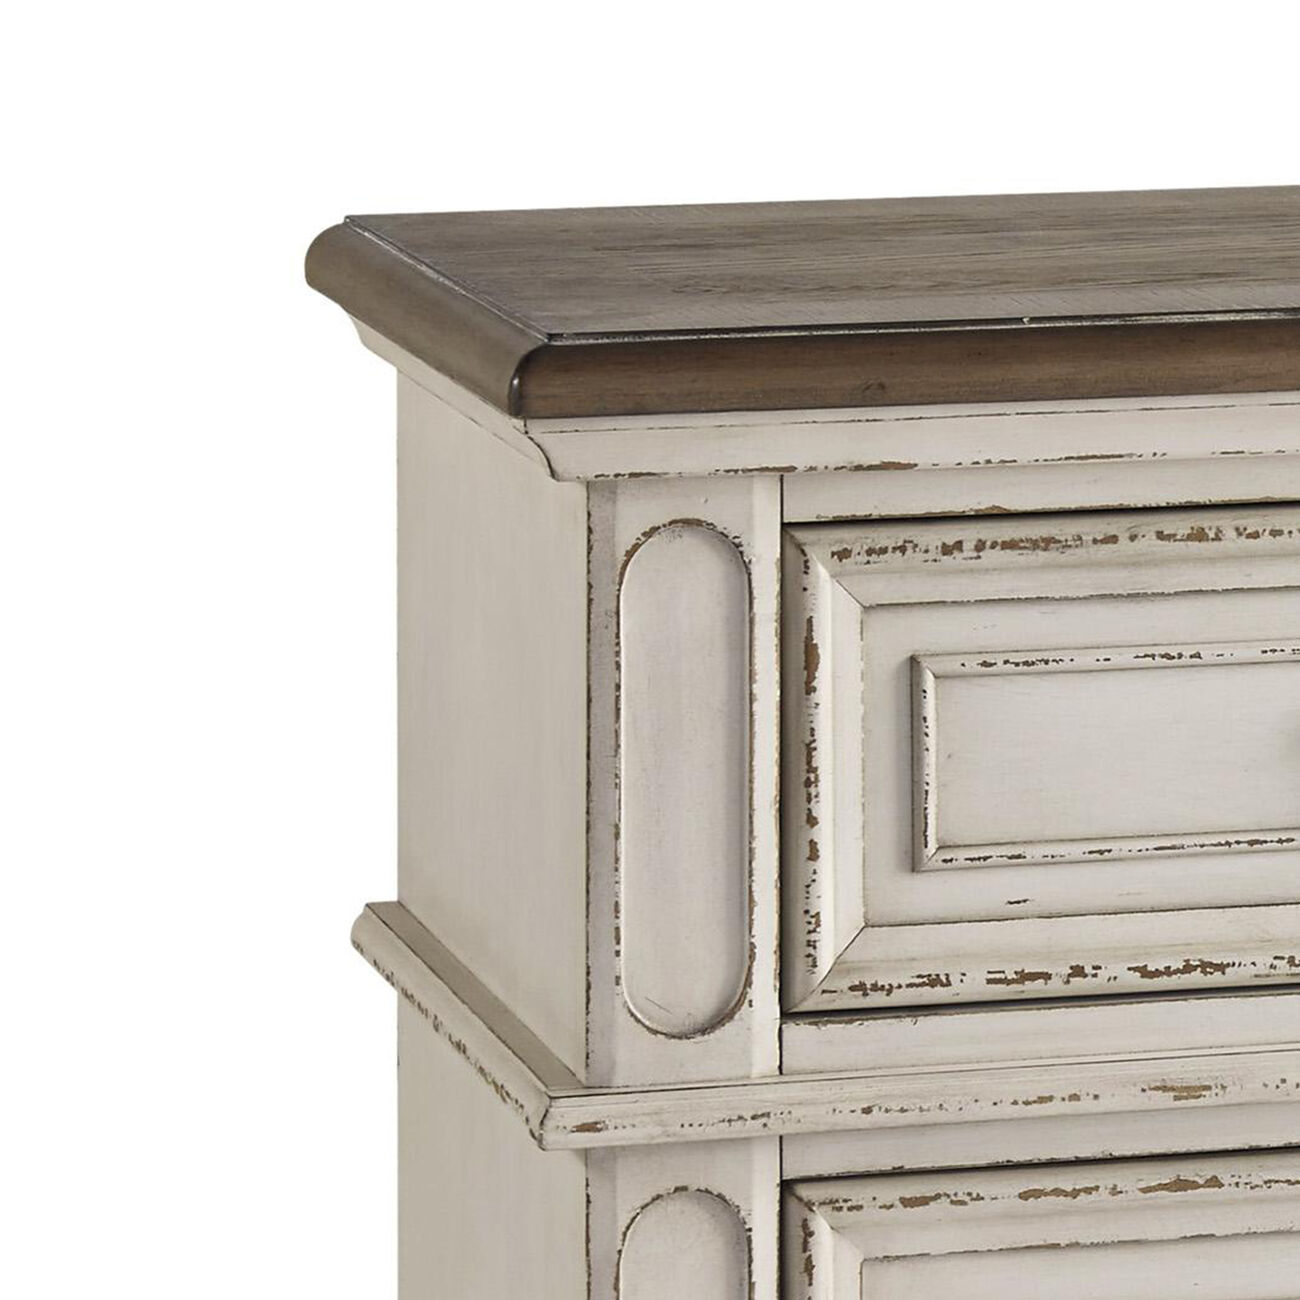 Wooden Dresser with 6 Storage Drawers and Bracket Feet, Antique White